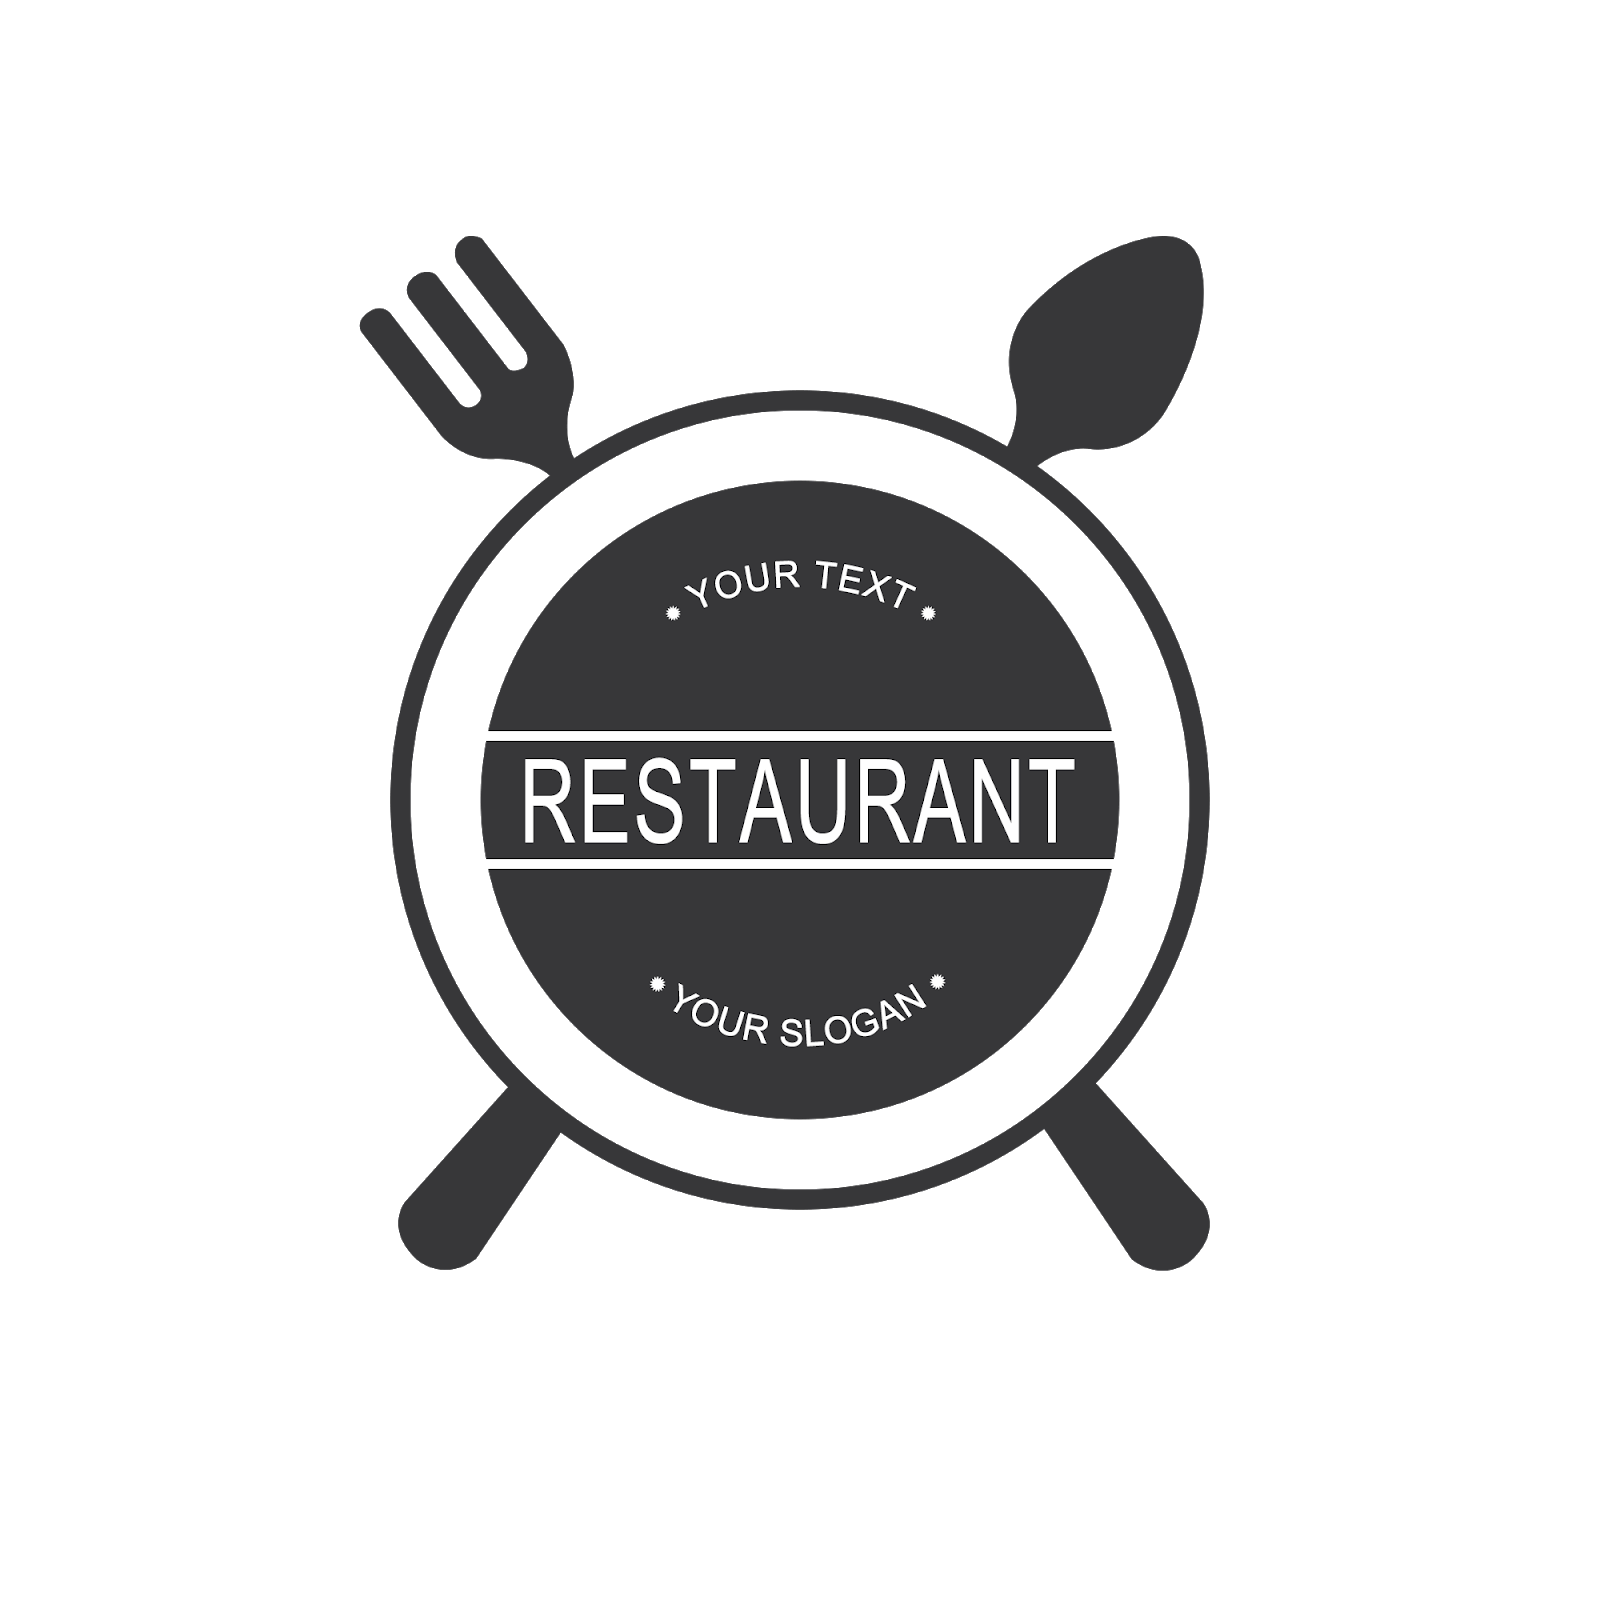 Restaurant Logo PNG Image HD